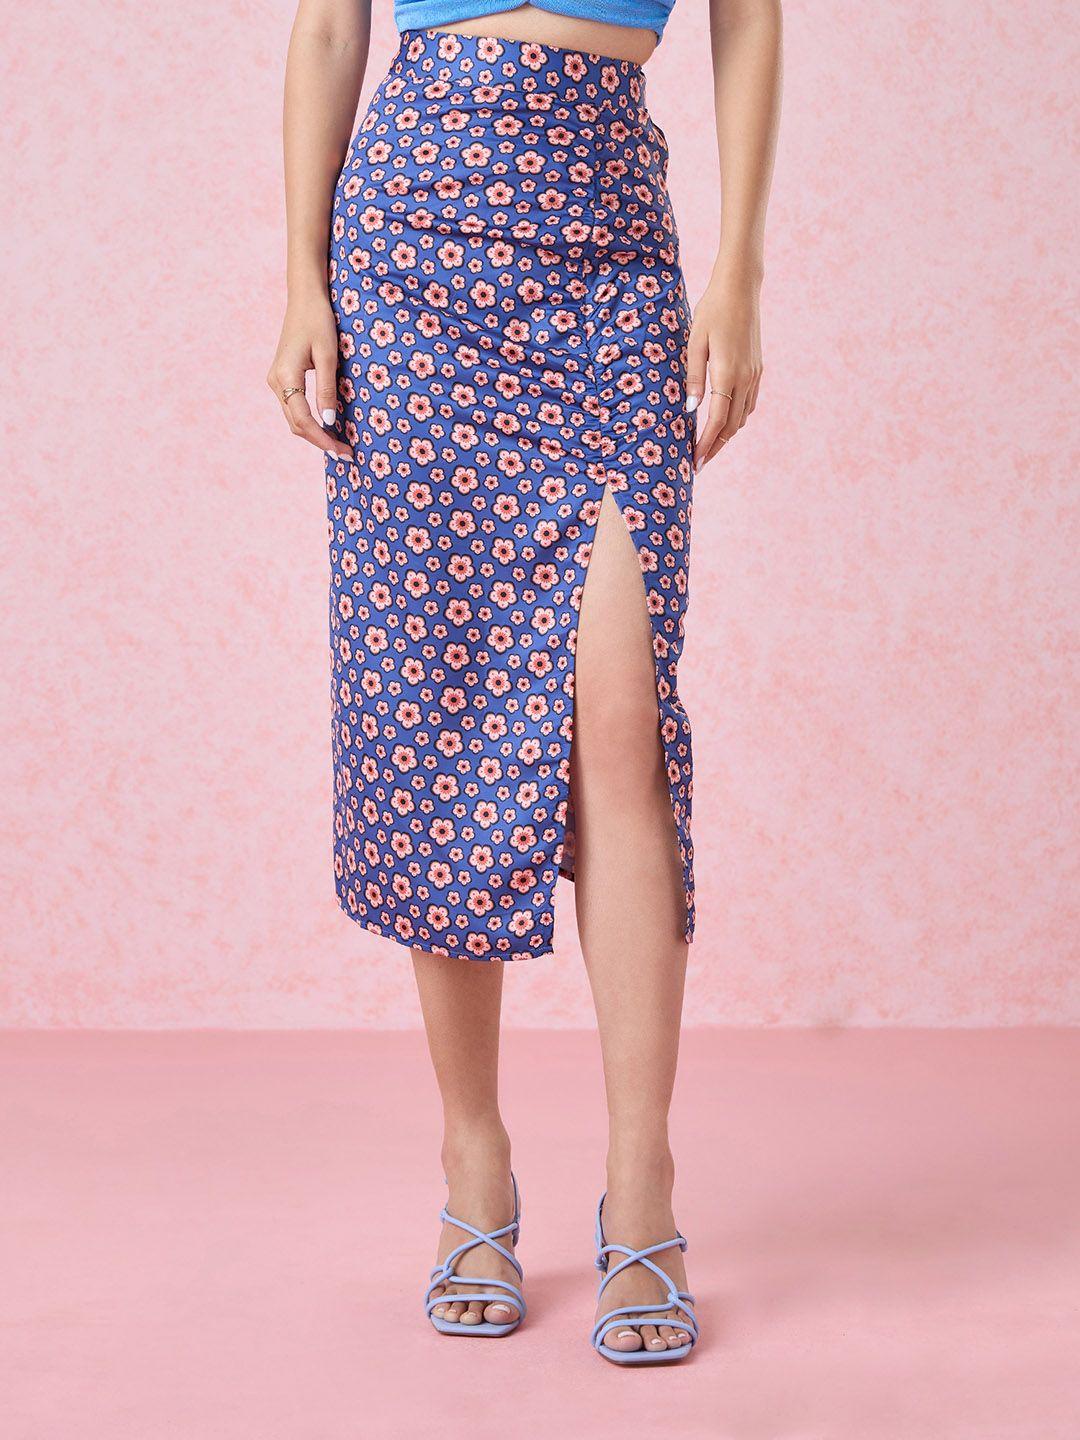 20dresses women blue floral printed pencil skirts